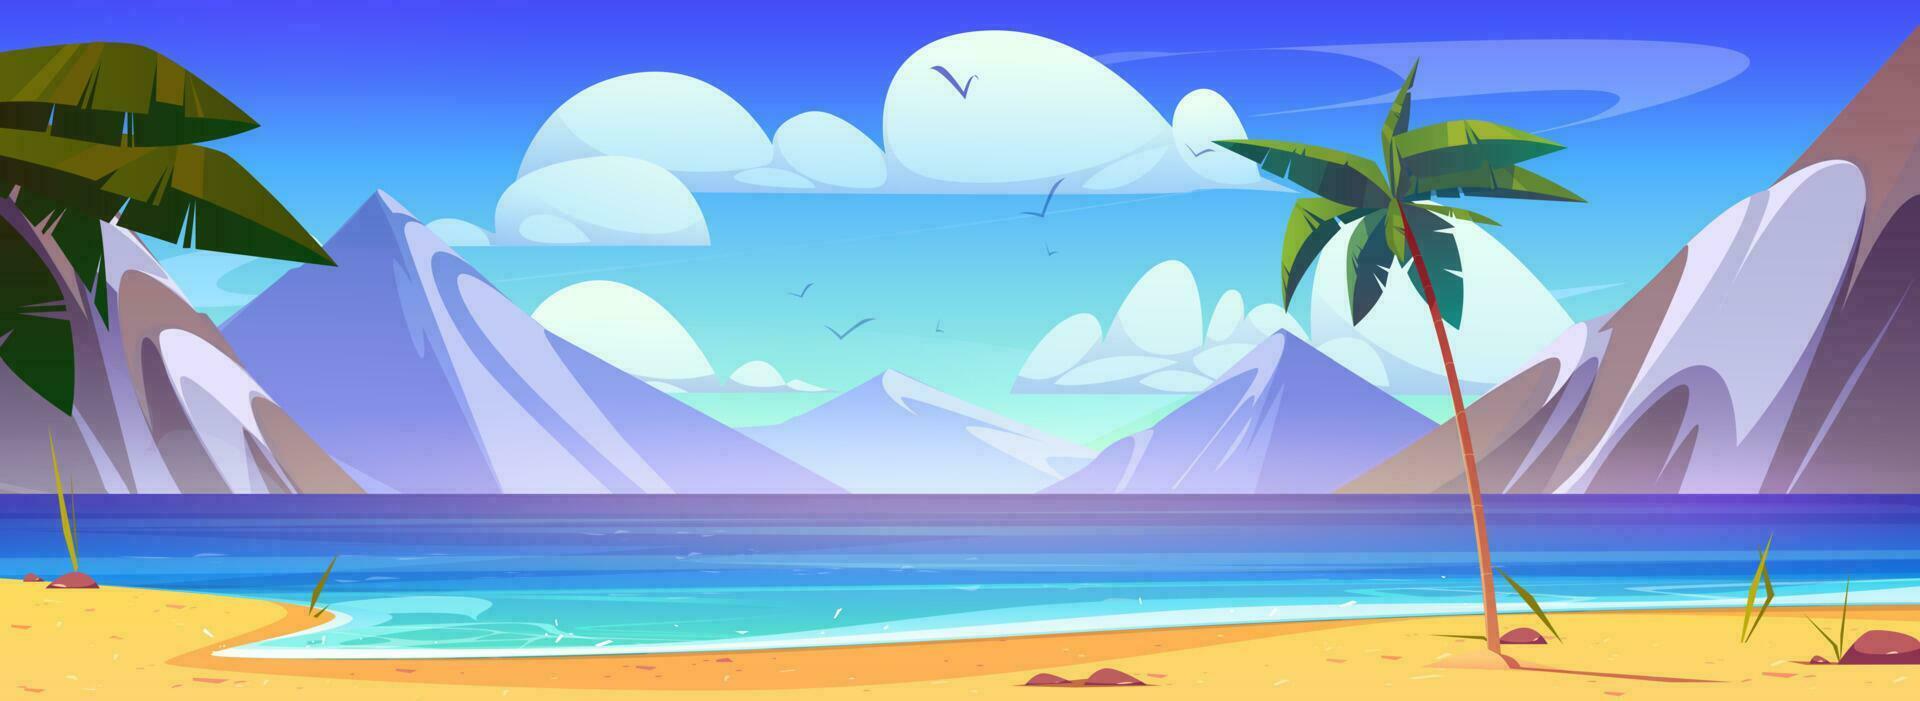 vector verano mar playa dibujos animados montaña ver